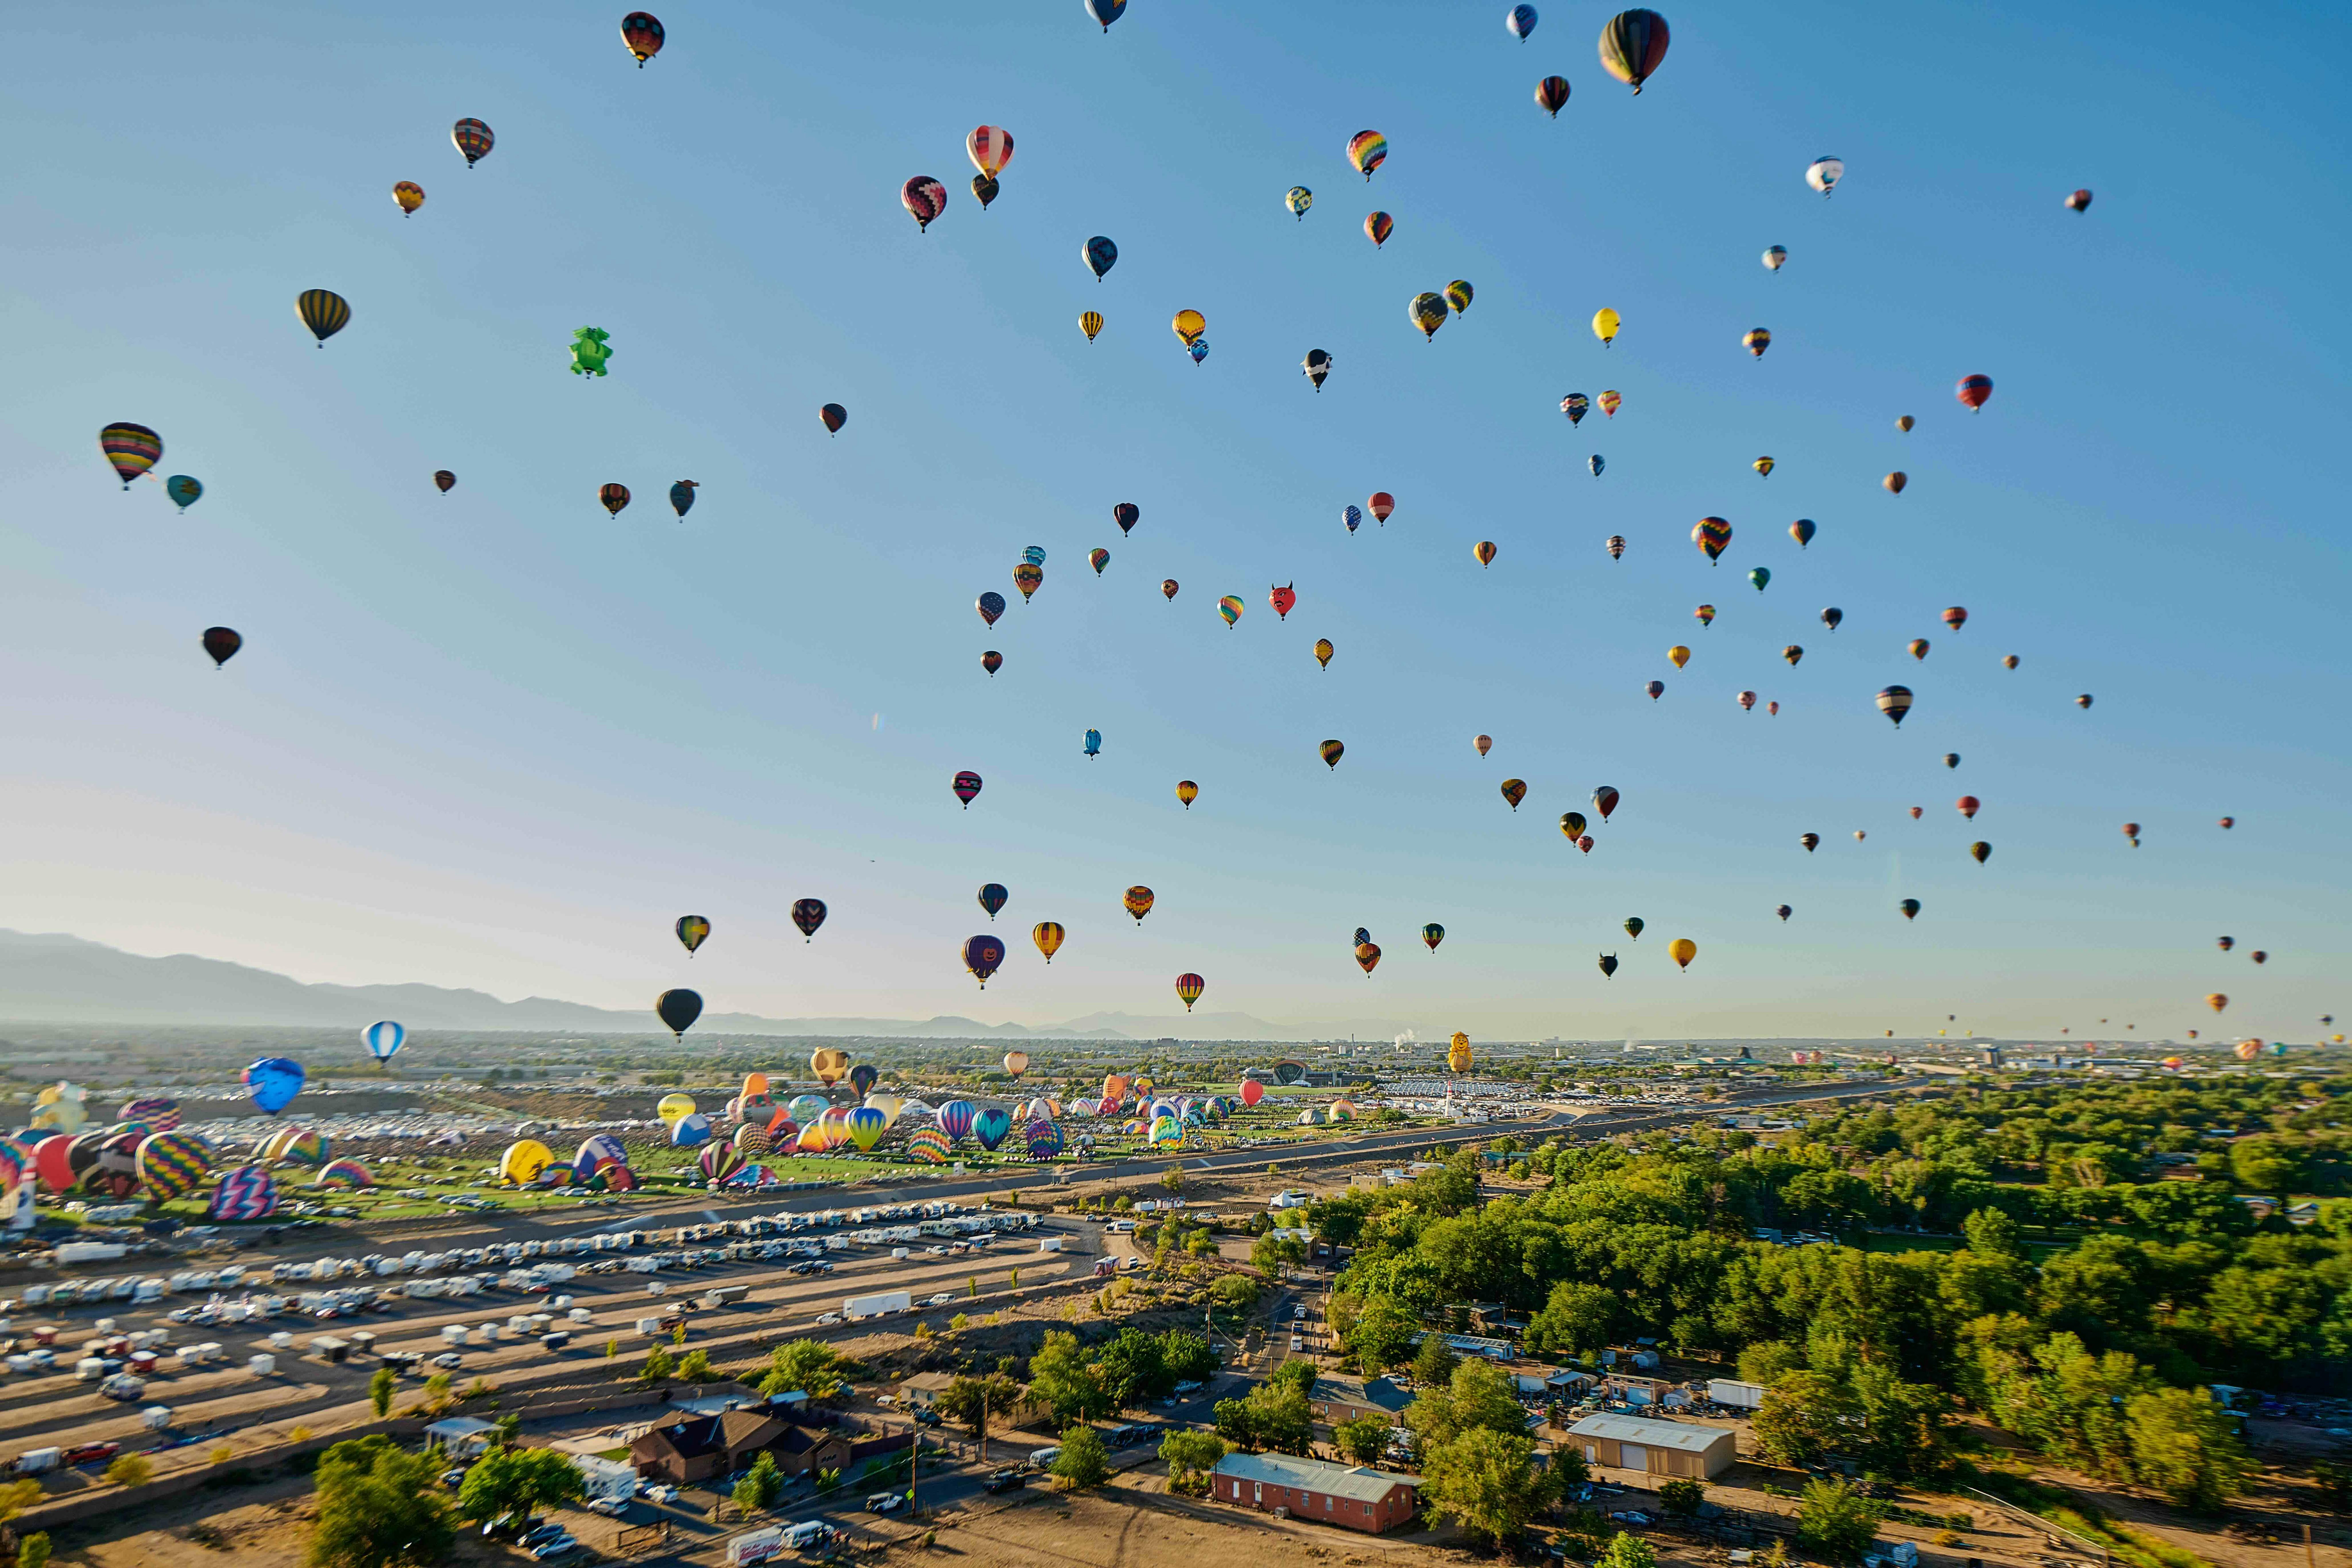 A sky full of hot air balloons in Albuquerque, New Mexico